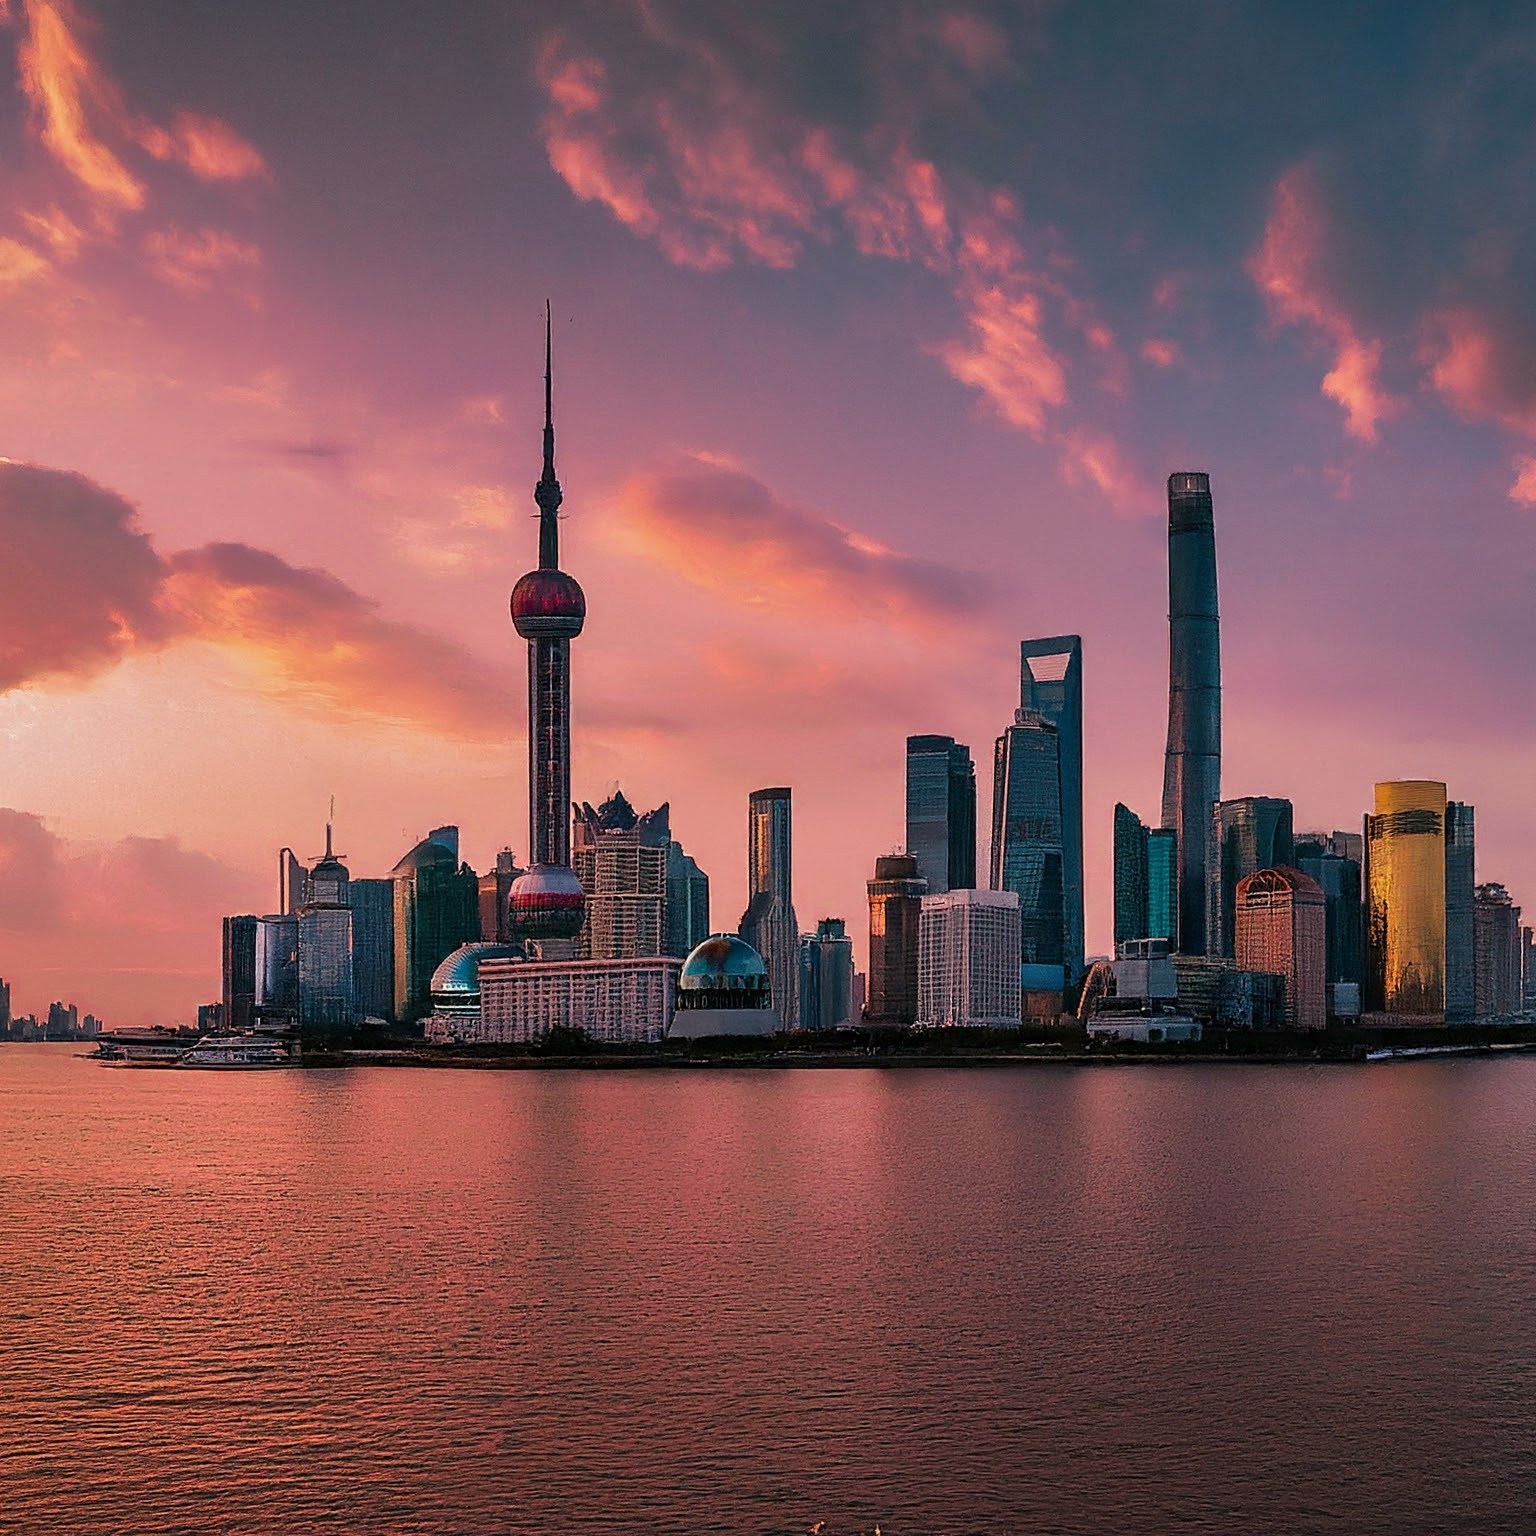 Shanghai skyline at dusk with the Oriental Pearl Tower illuminated.